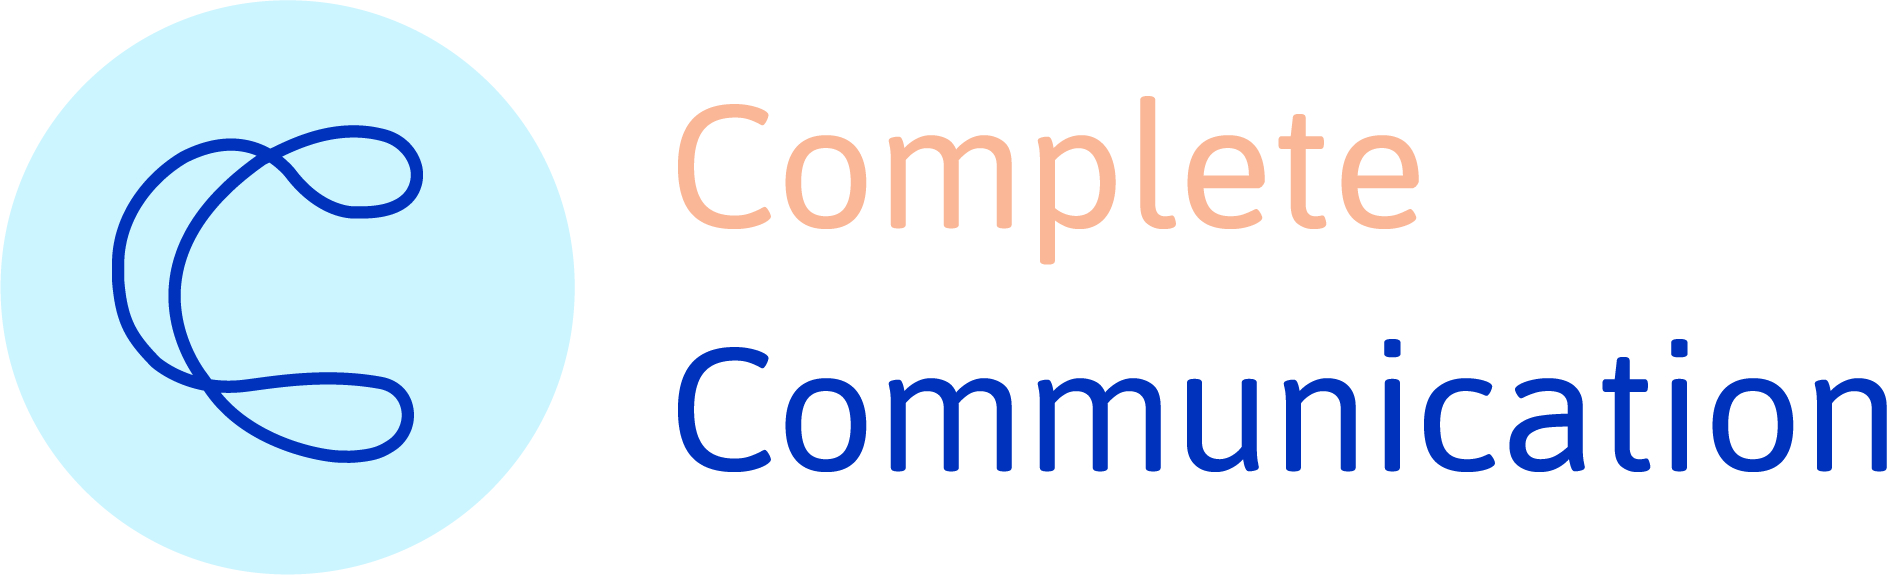 Complete Logo